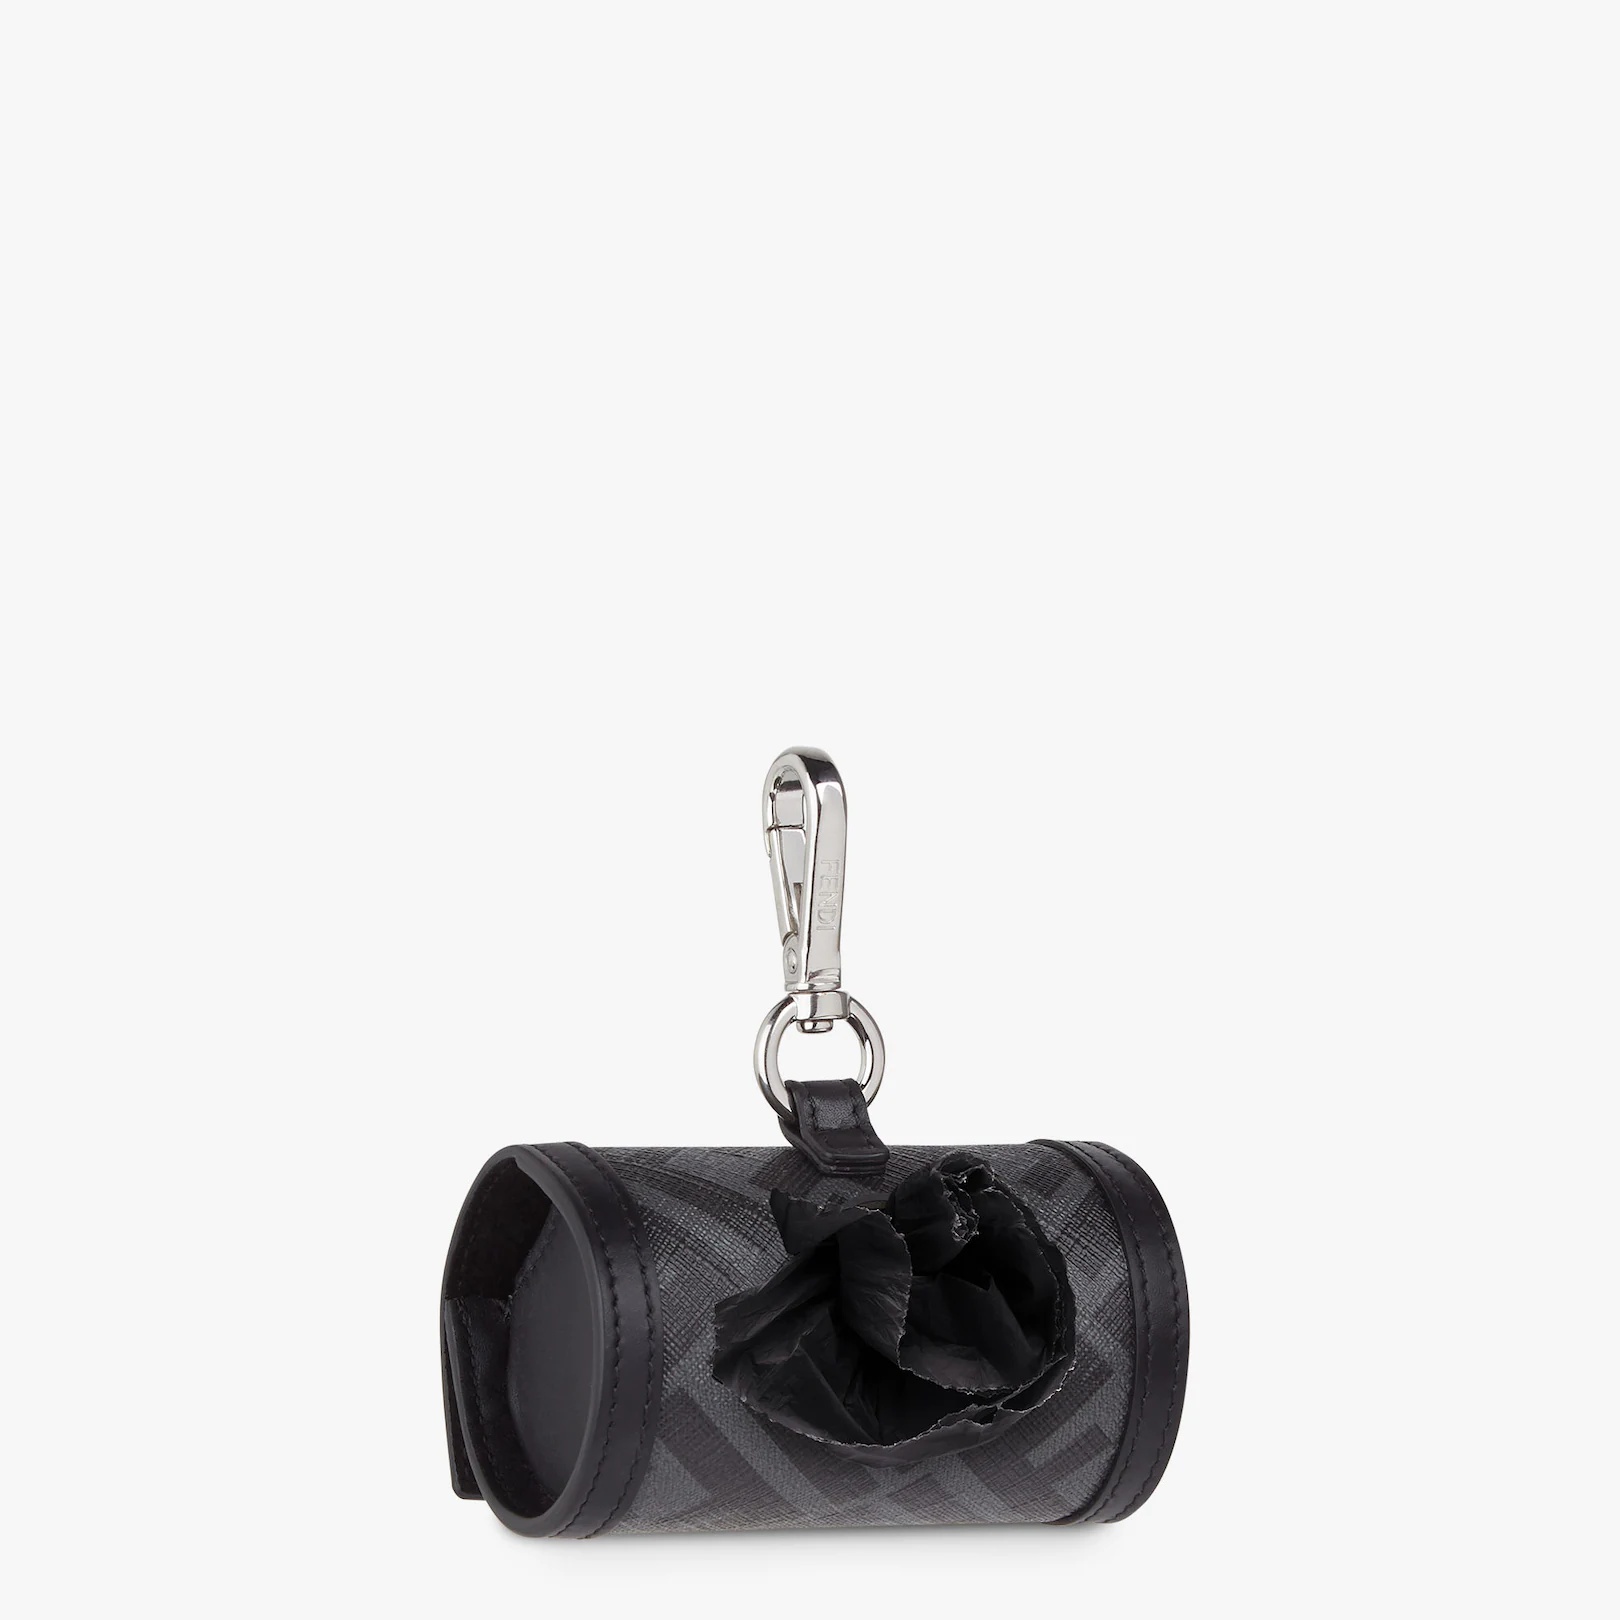 Black fabric bag holder - 1